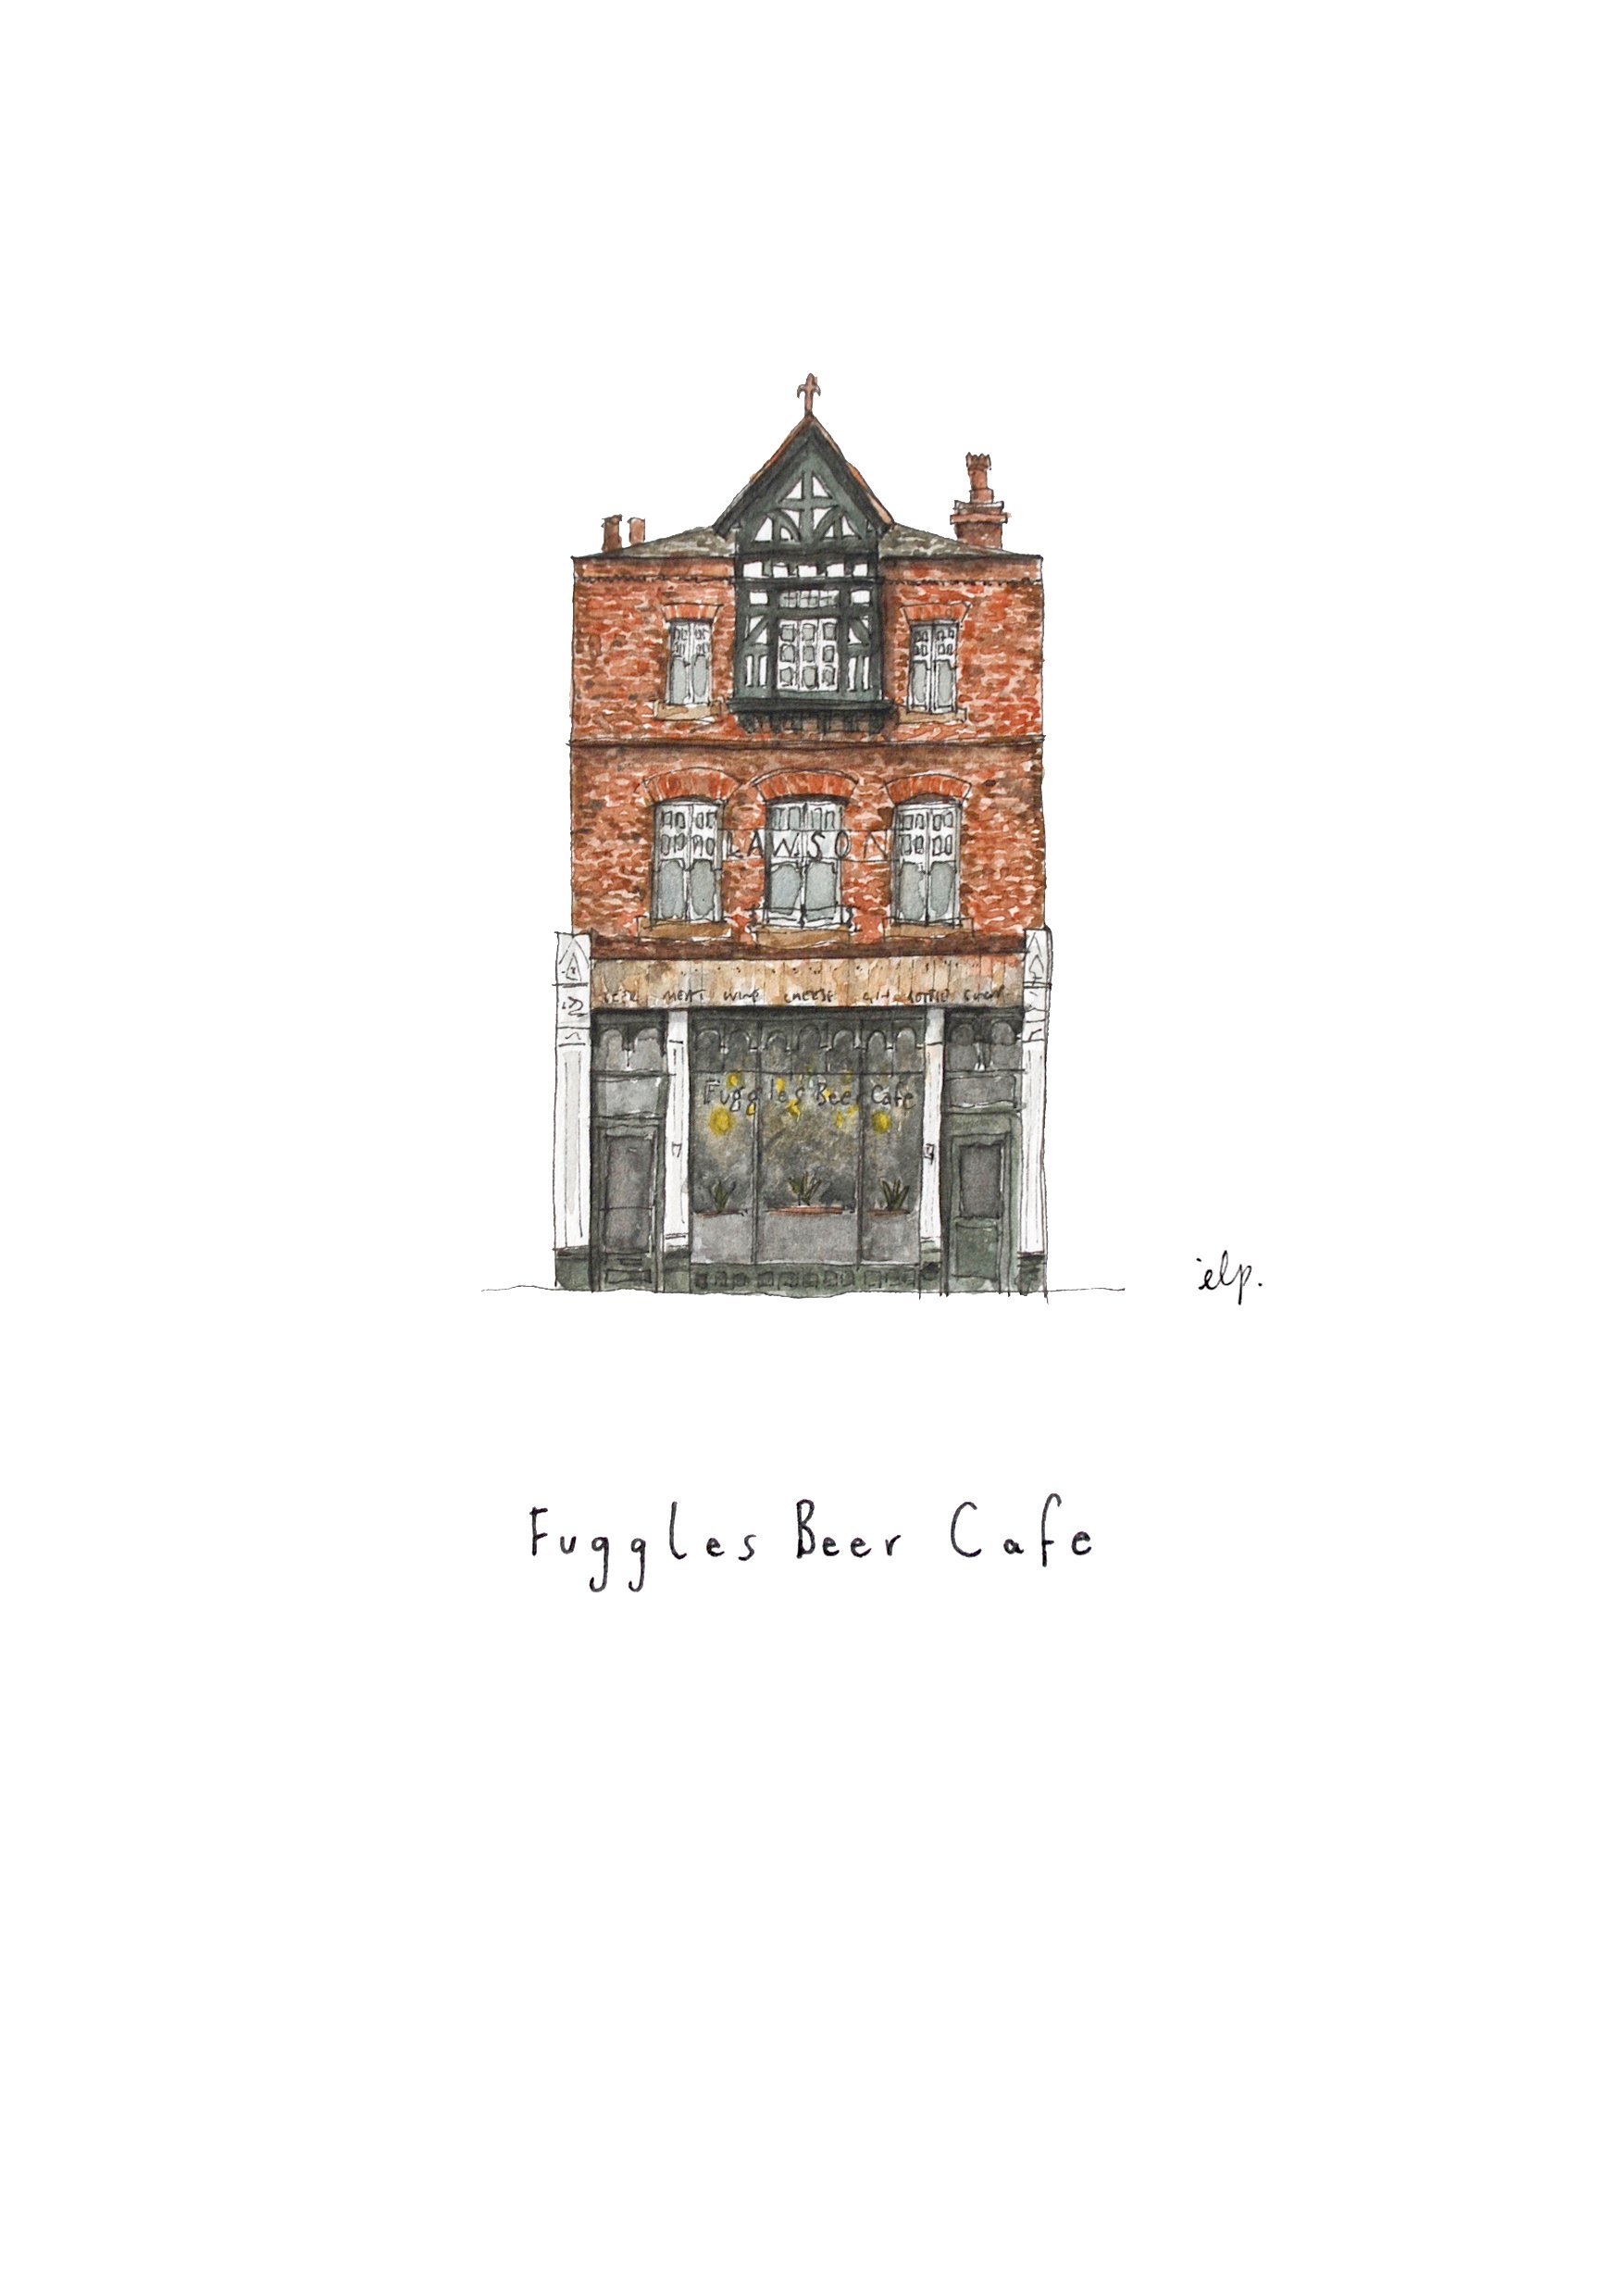 Fuggles Beer Cafe, Tonbridge